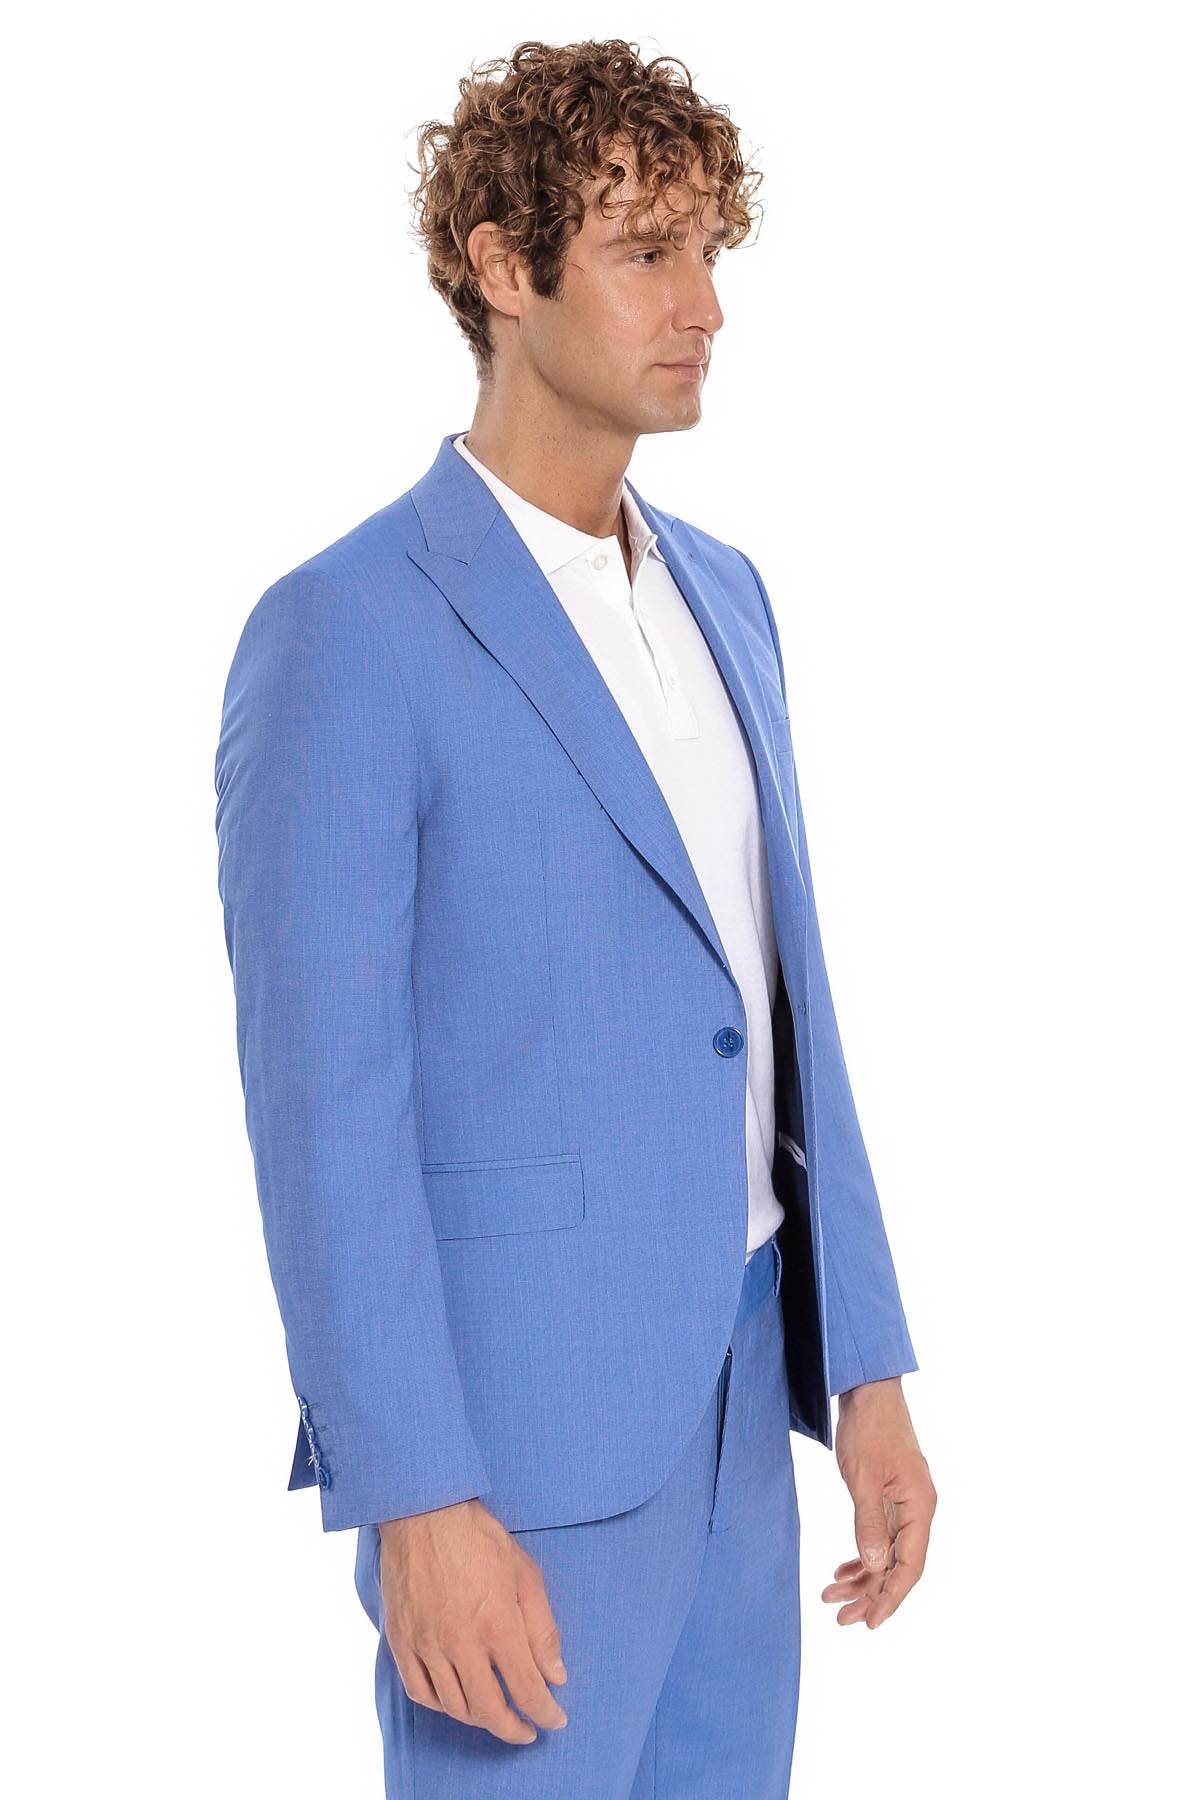 Tuxedo Three Piece Royal Blue Textured Formal Suit - Igor